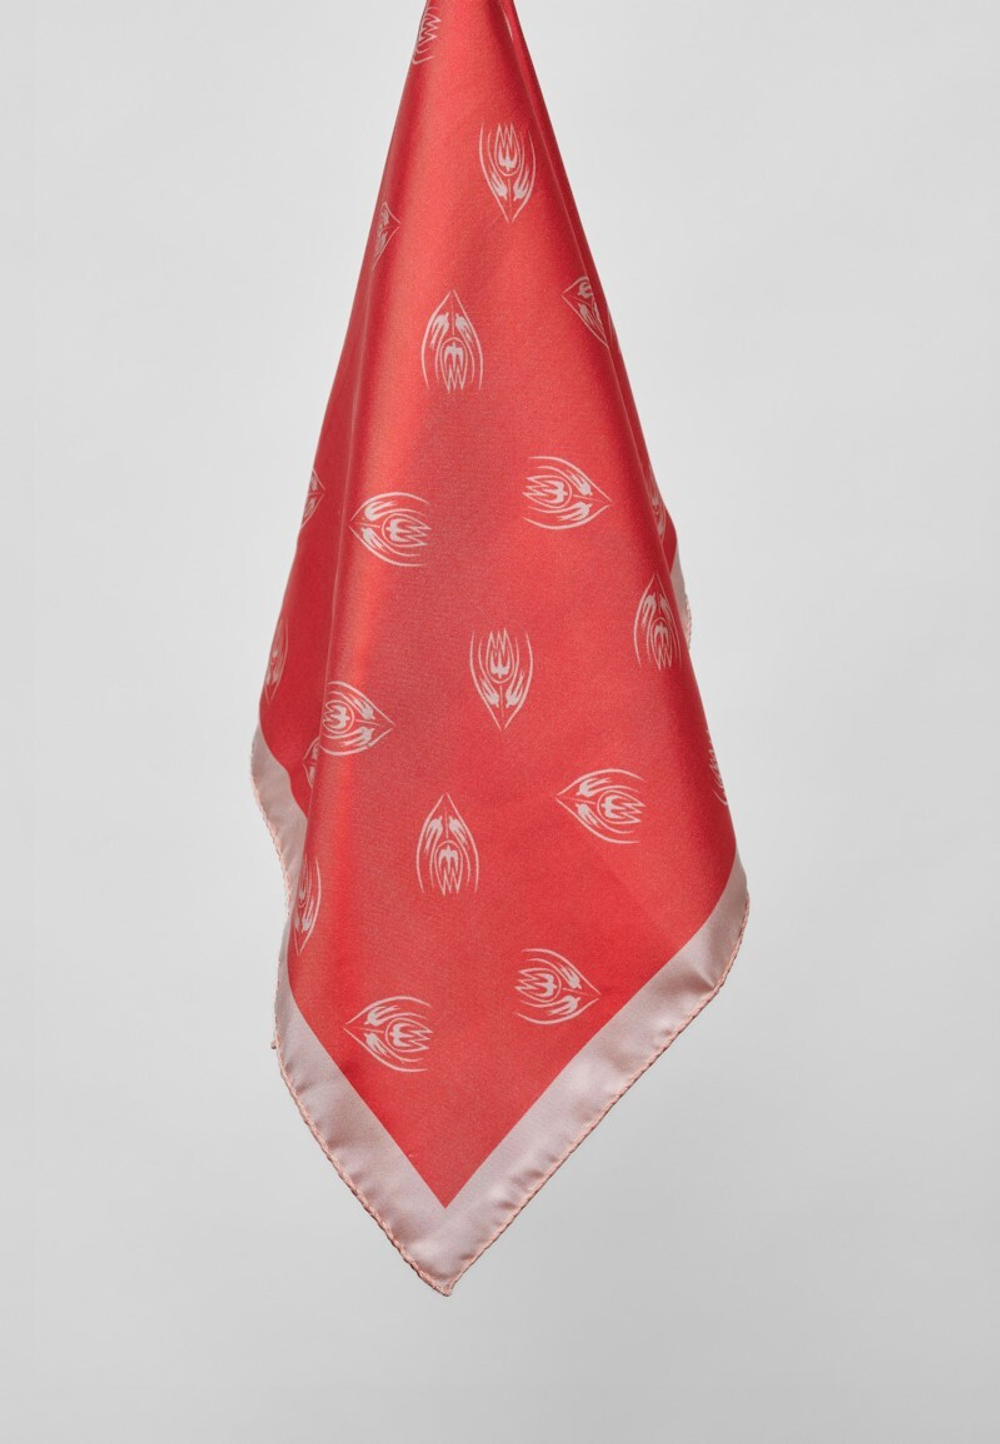 Шелковый платок Ласточка и тюльпан RED/BEIGE 70×70